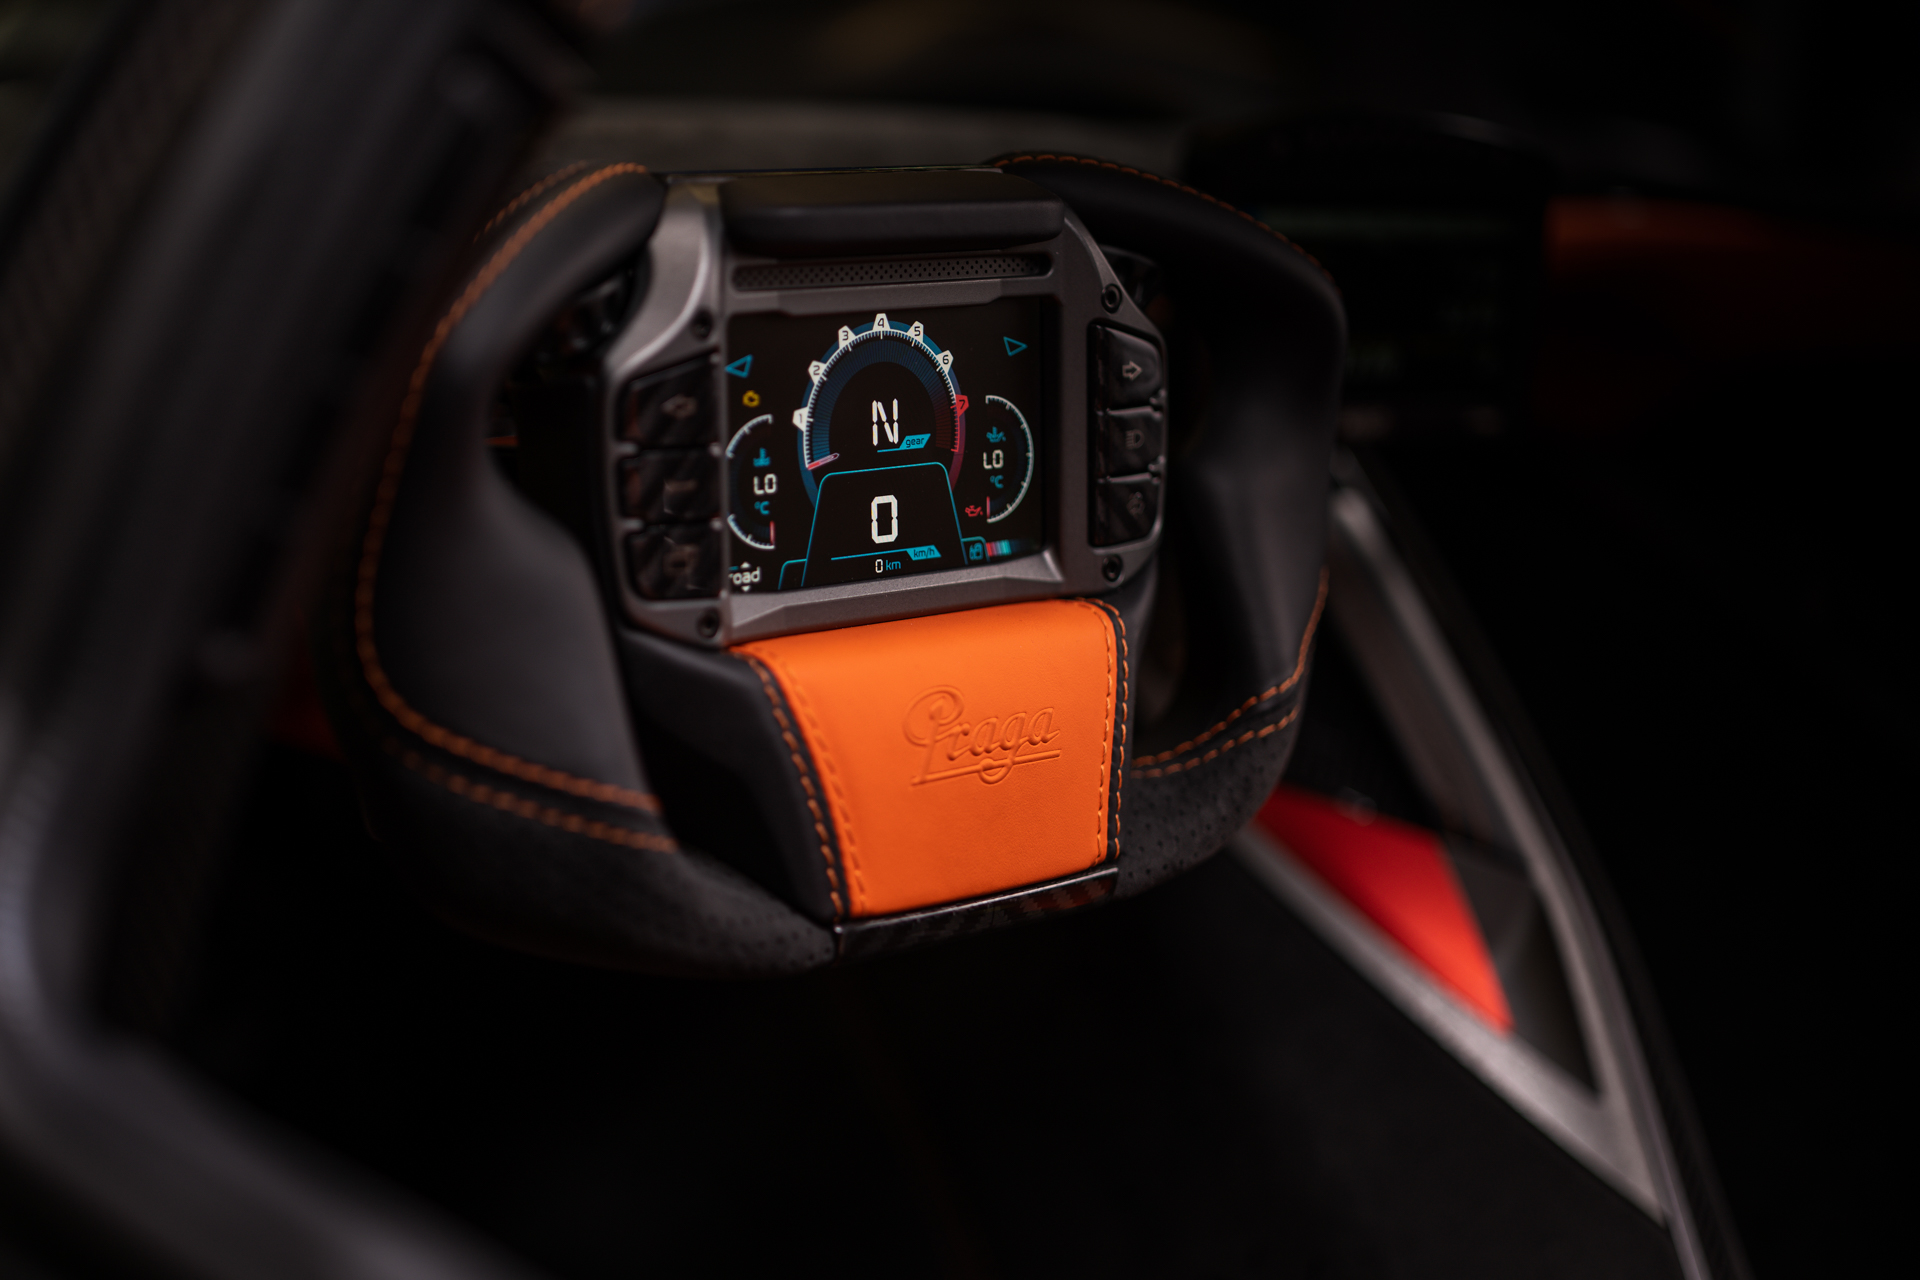 Genuine leather steering with display and orange detail